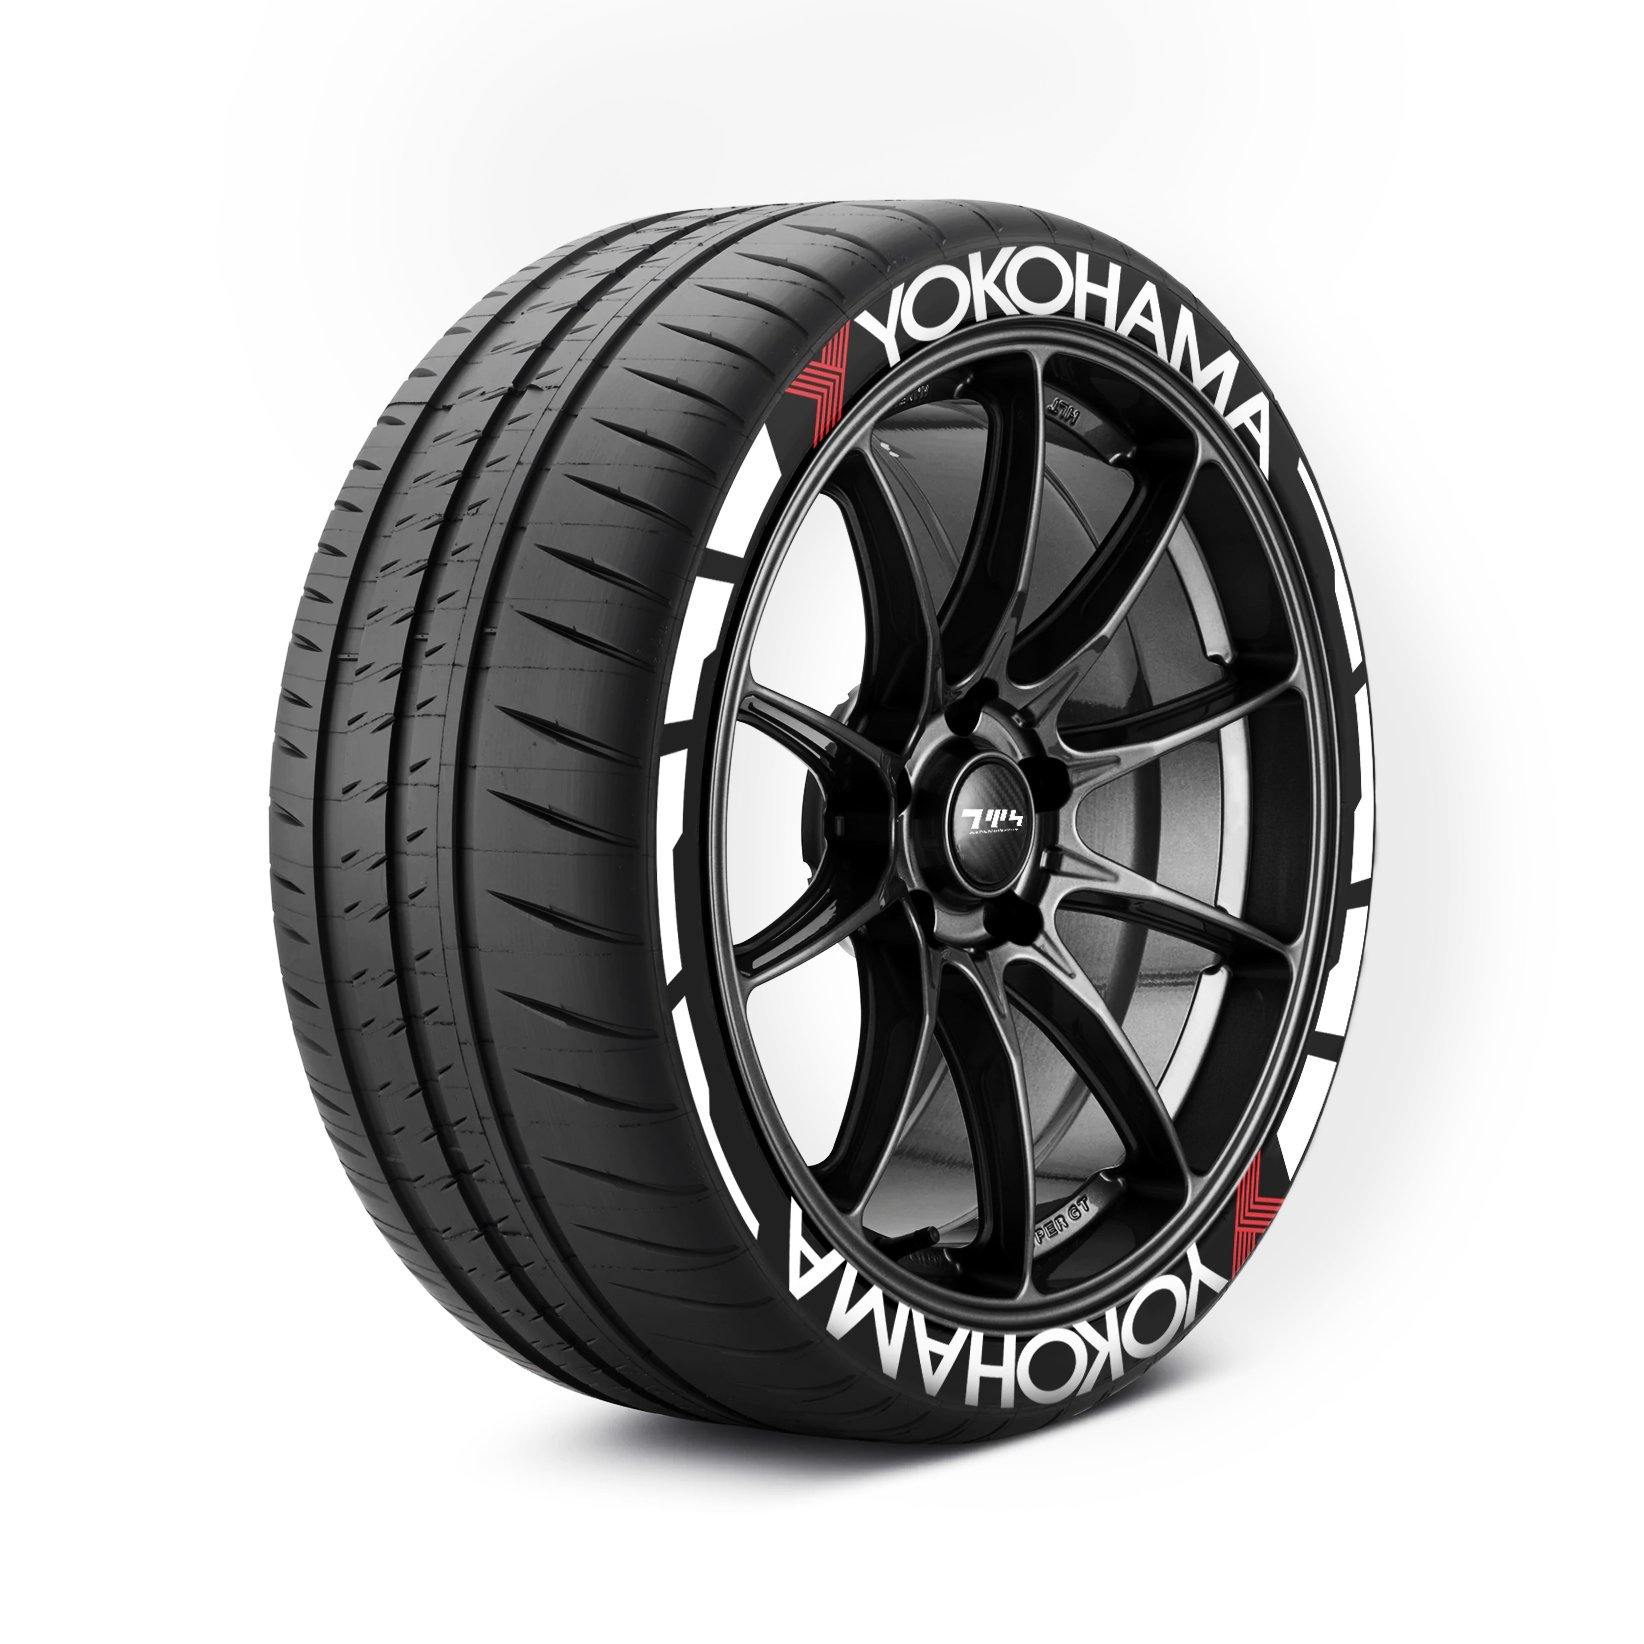 YOKOHAMA Reifenaufkleber mit Fackeln – Tyre Wall Stickers